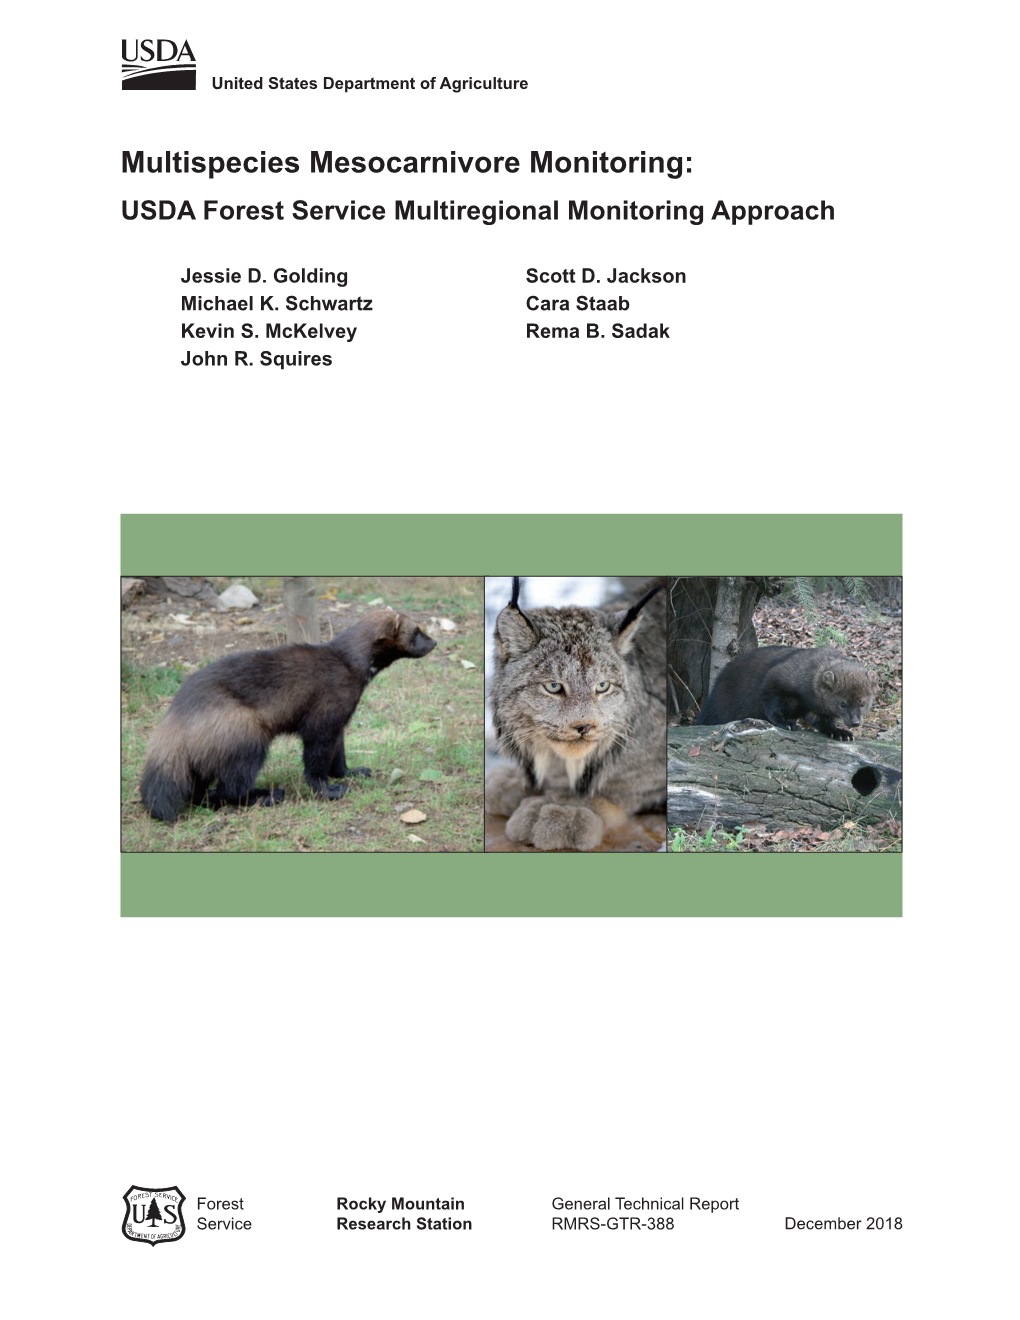 Multispecies Mesocarnivore Monitoring: USDA Forest Service Multiregional Monitoring Approach